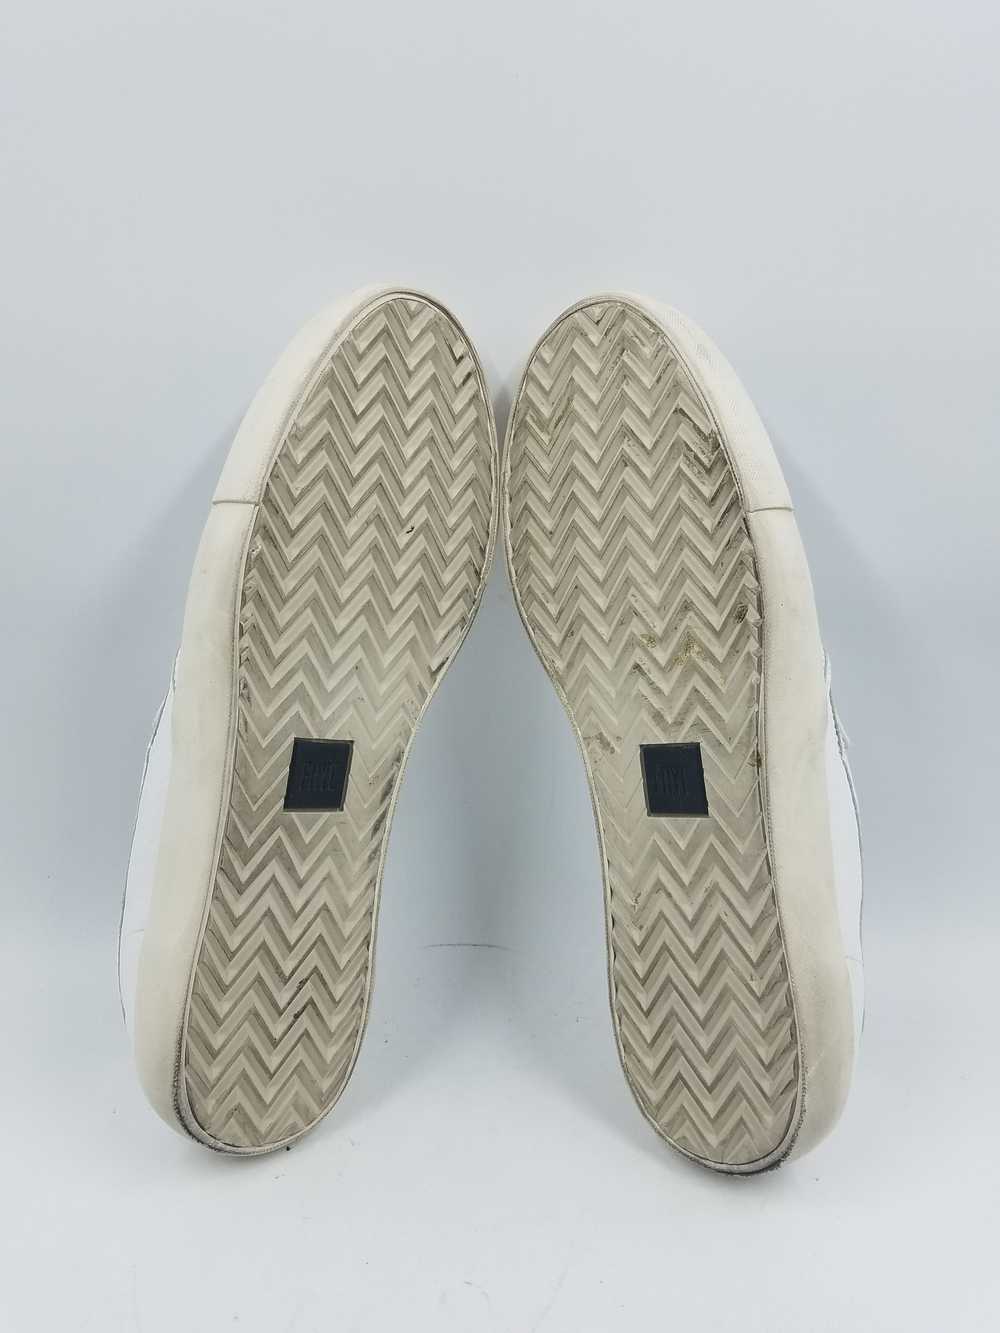 Frye White Leather Slip-On Sneakers Men's 12 - image 5